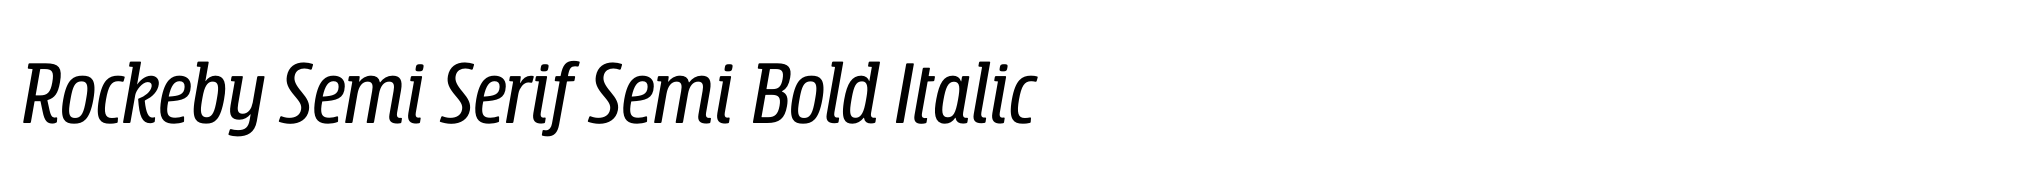 Rockeby Semi Serif Semi Bold Italic image